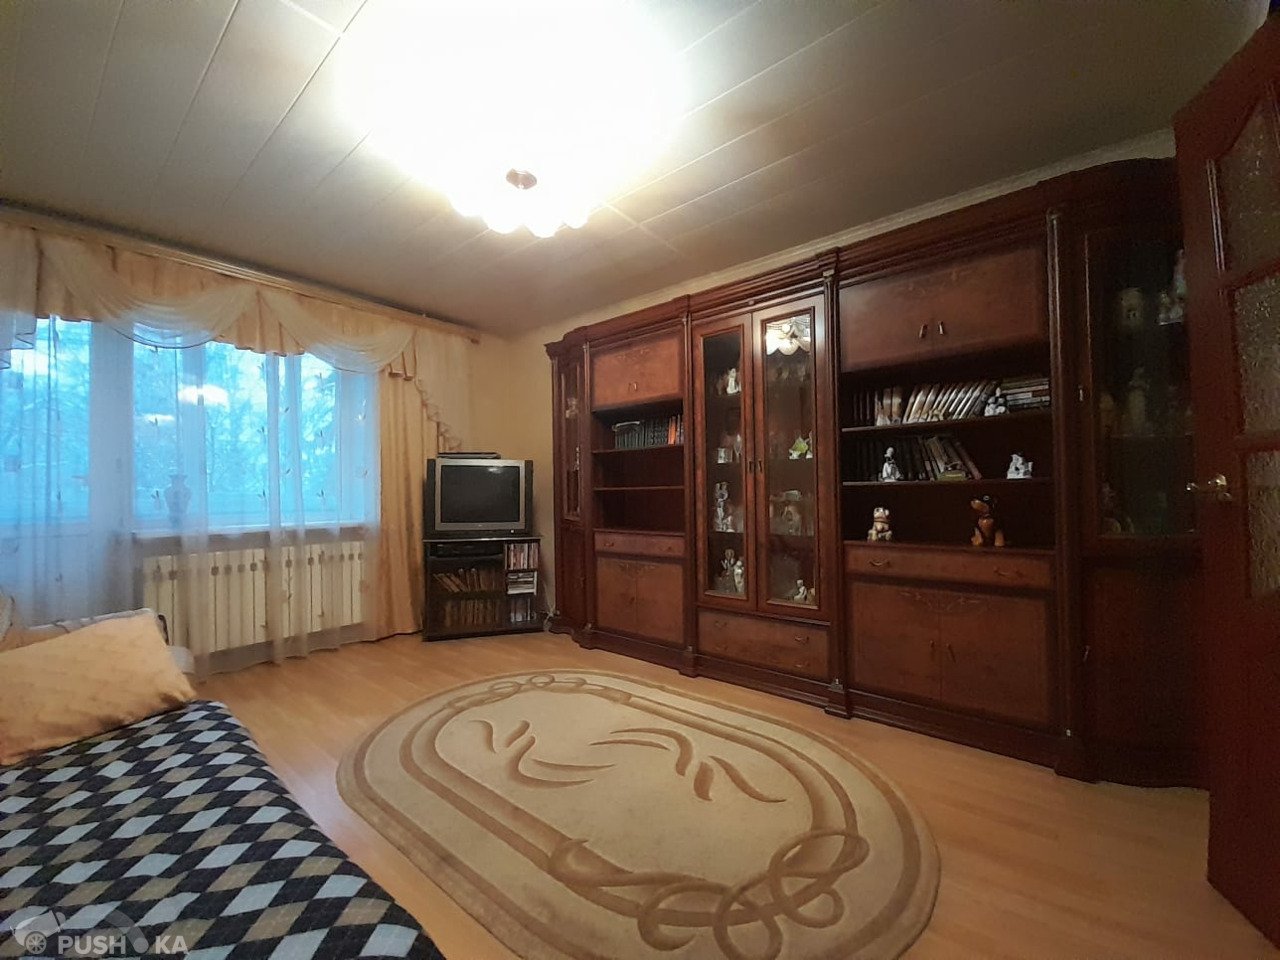 Продаётся 3-комнатная квартира 57.0 кв.м. этаж 3/5 за 4 350 000 руб 